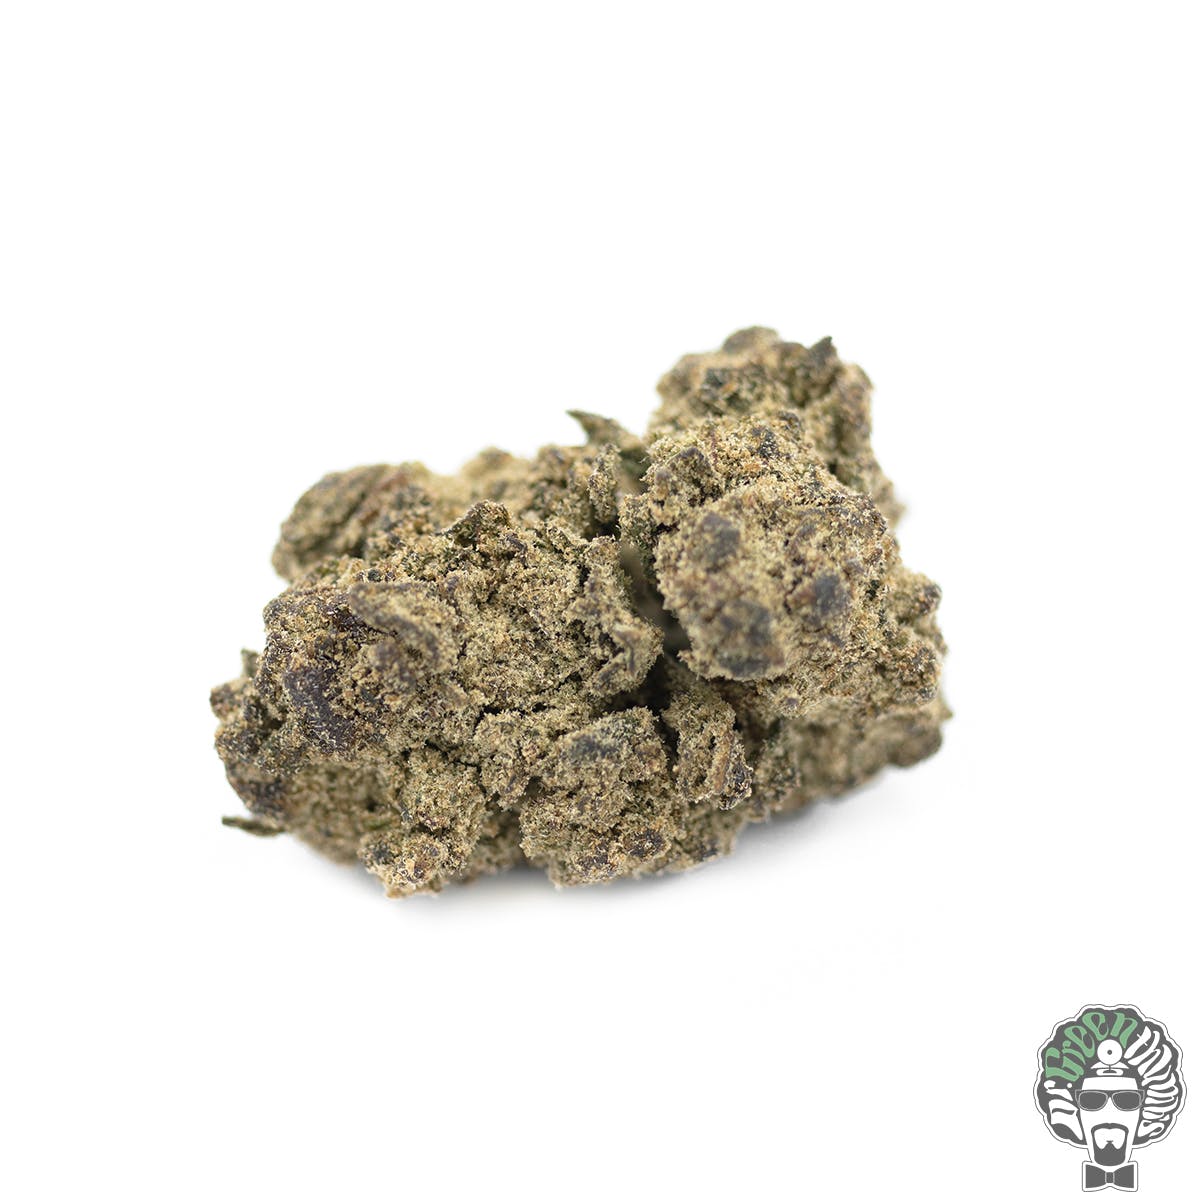 Strawberry Moonrock Cannabis By Caviar Gold